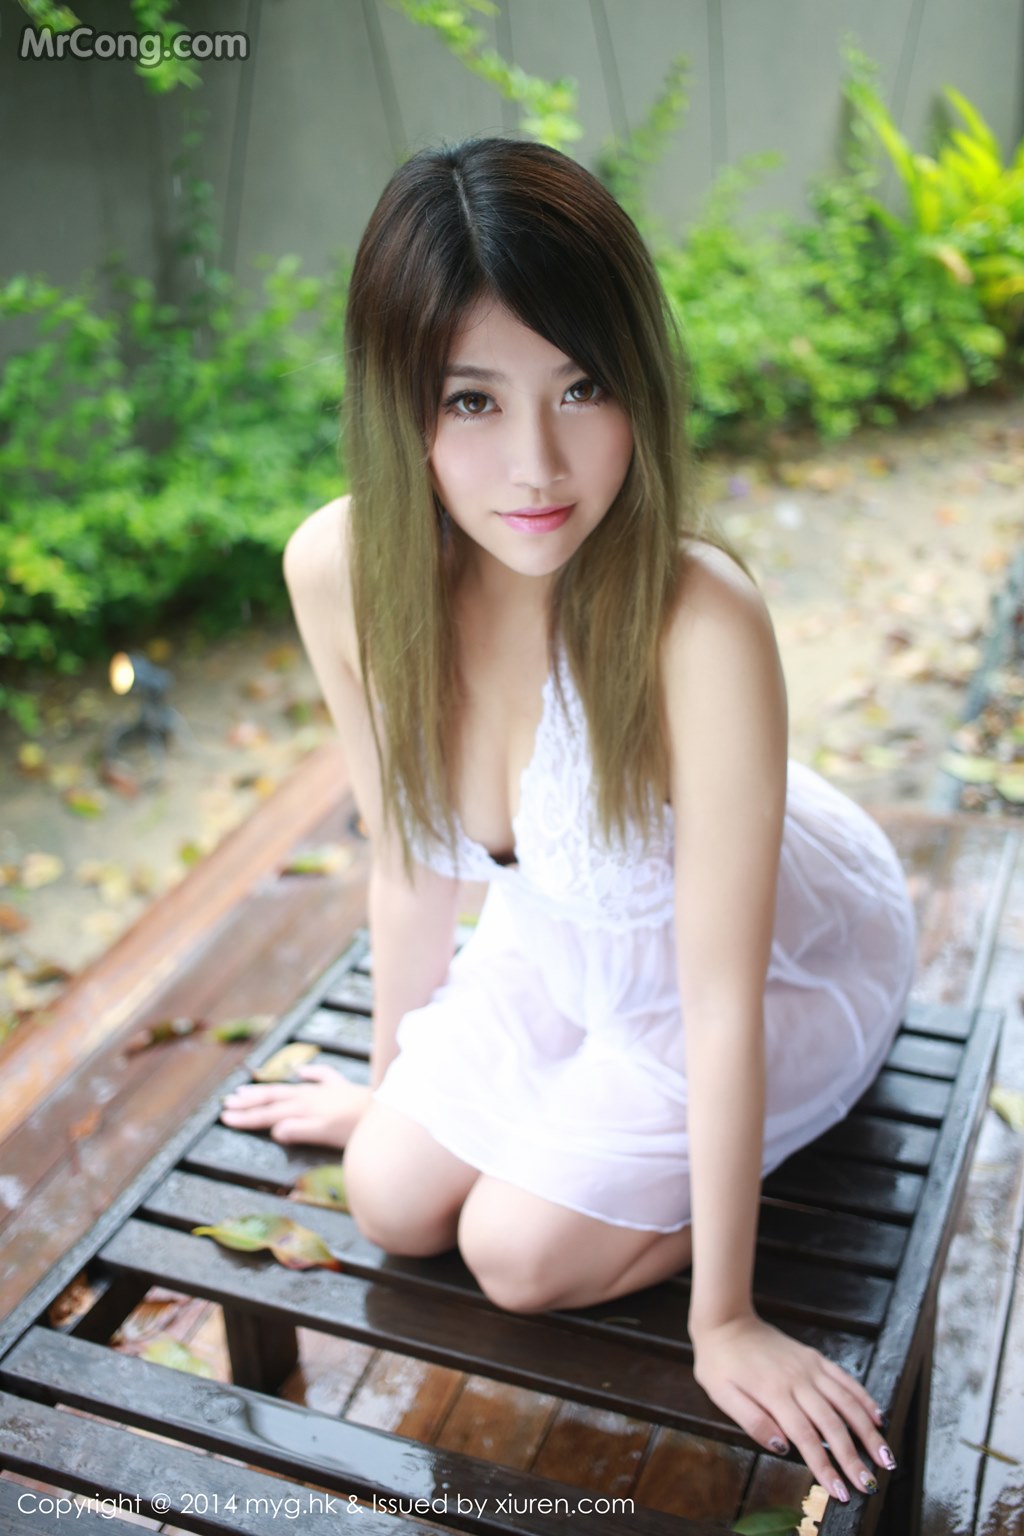 MyGirl Vol.023: Model Sabrina (许诺) (61 pictures) photo 1-5